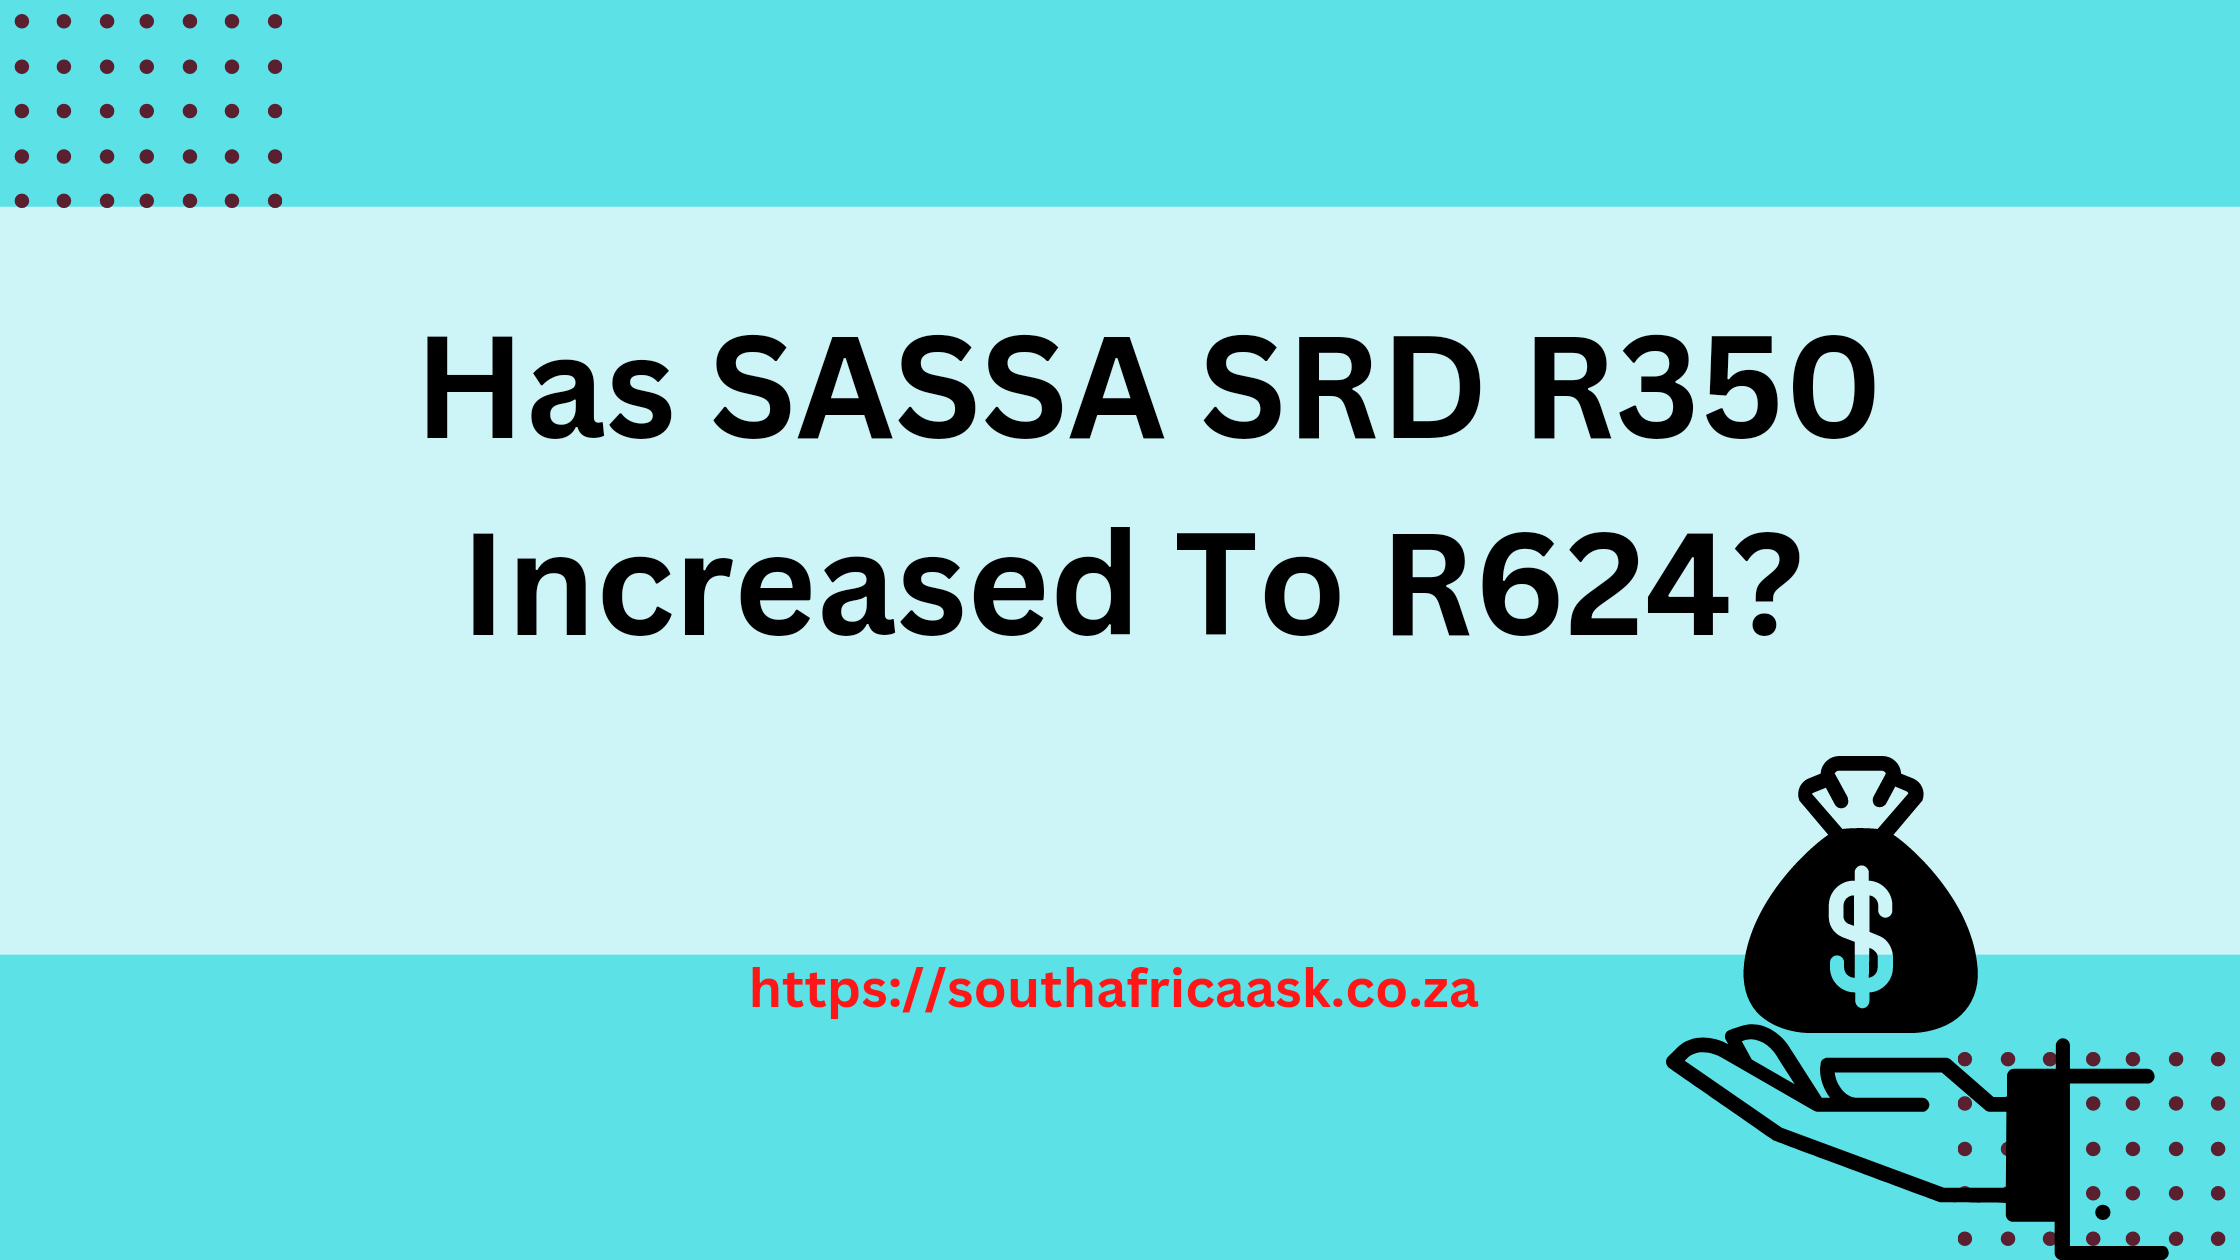 Has SASSA SRD R350 Increased To R624?